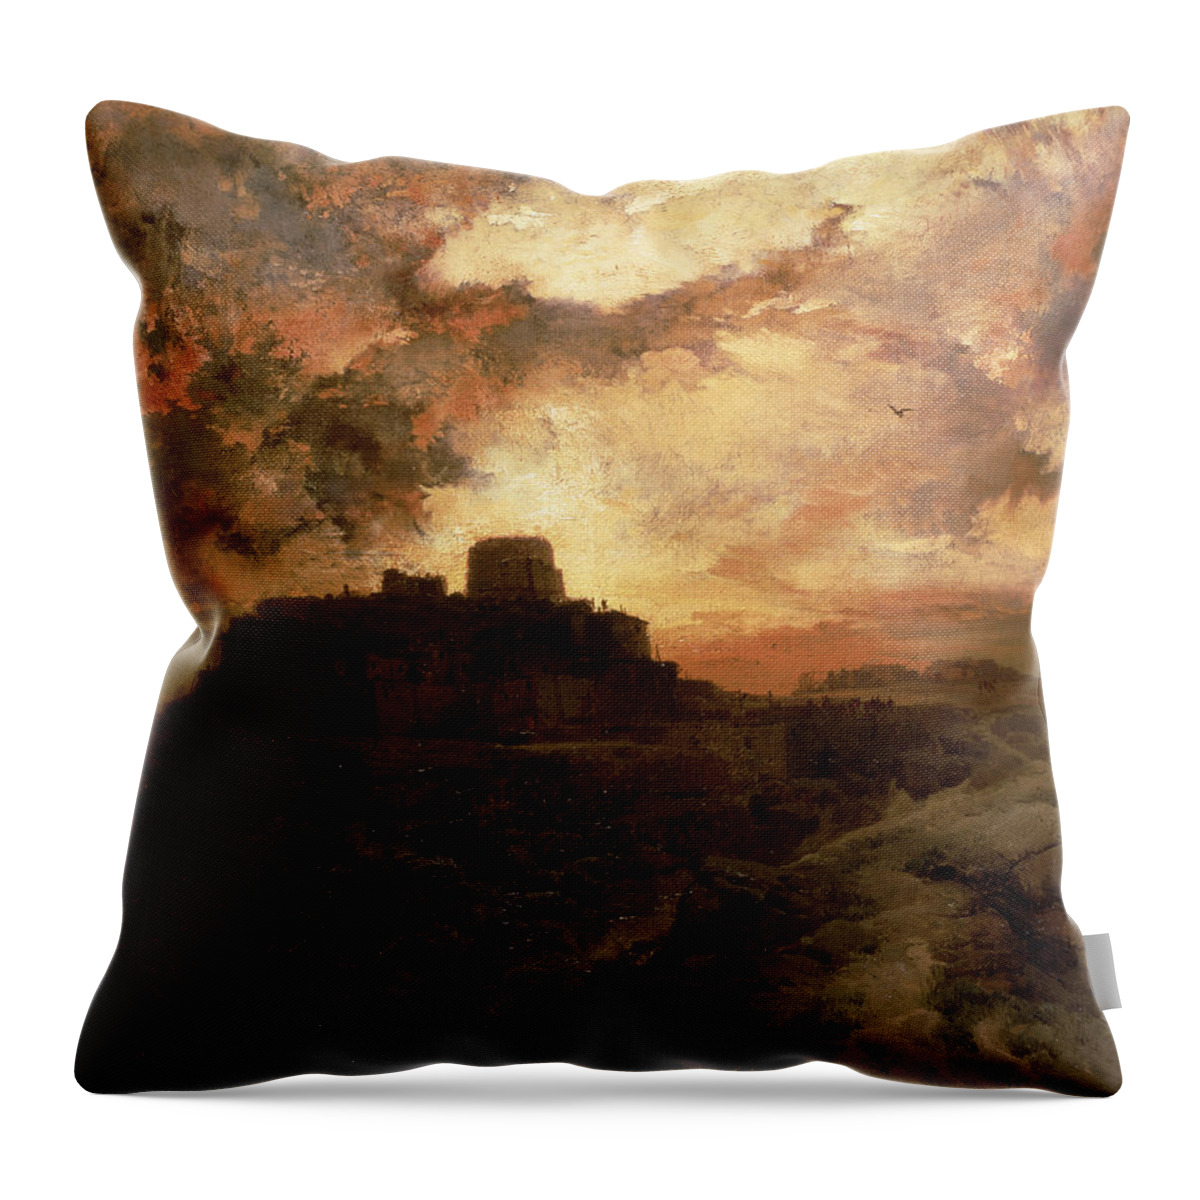 Sunset Throw Pillow featuring the painting Arizona Sunset by Thomas Moran 